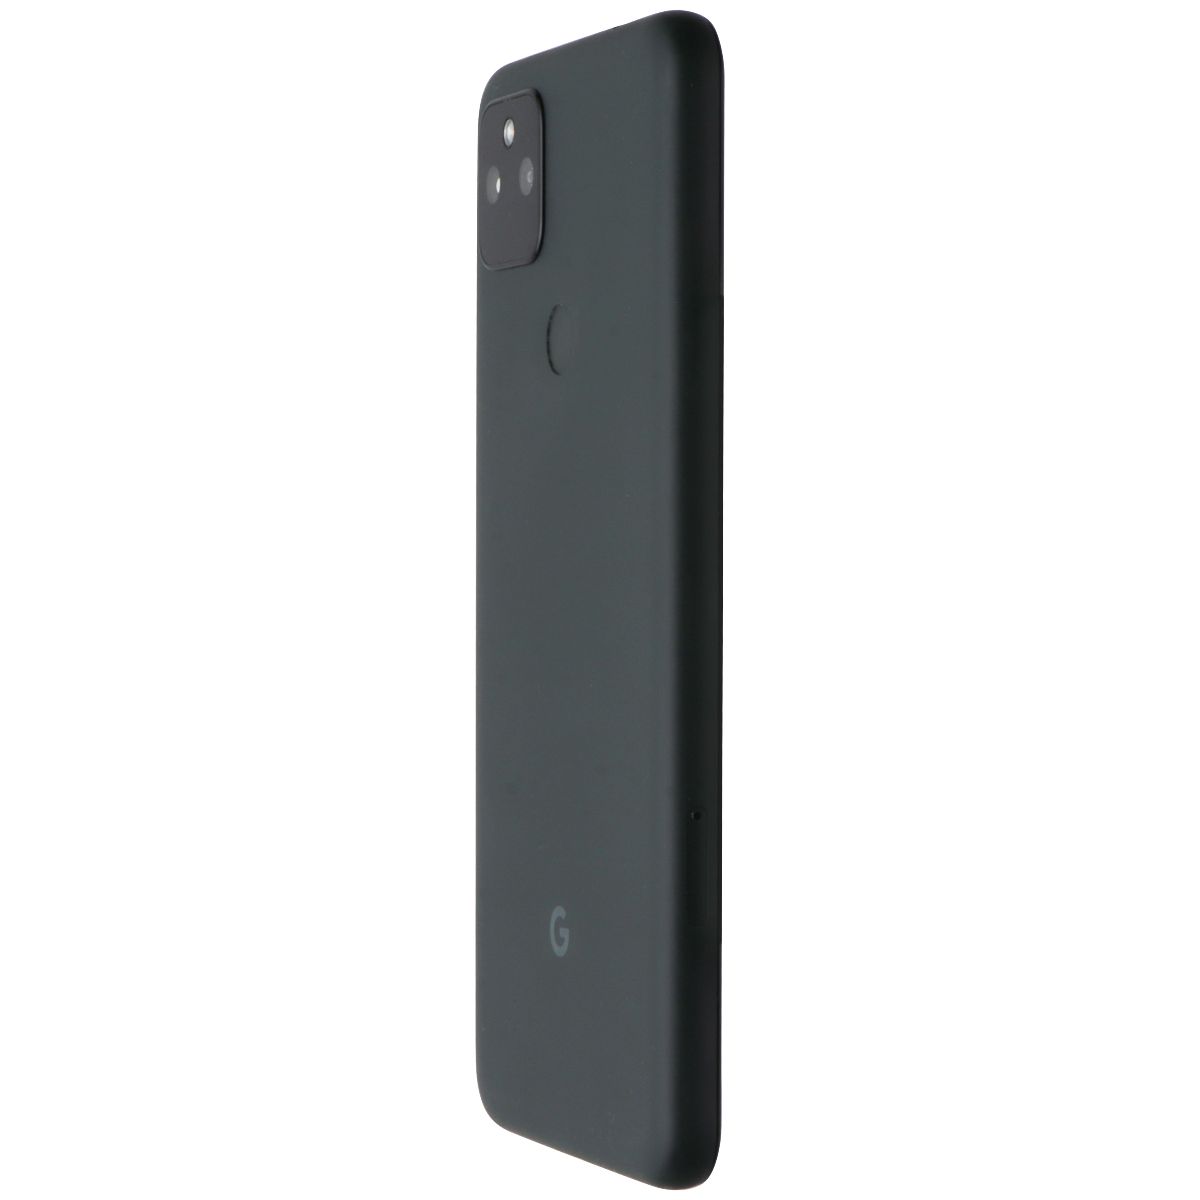 Google Pixel 5a (6.34-inch) Smartphone (G1F8F) Verizon 128GB - Mostly Black